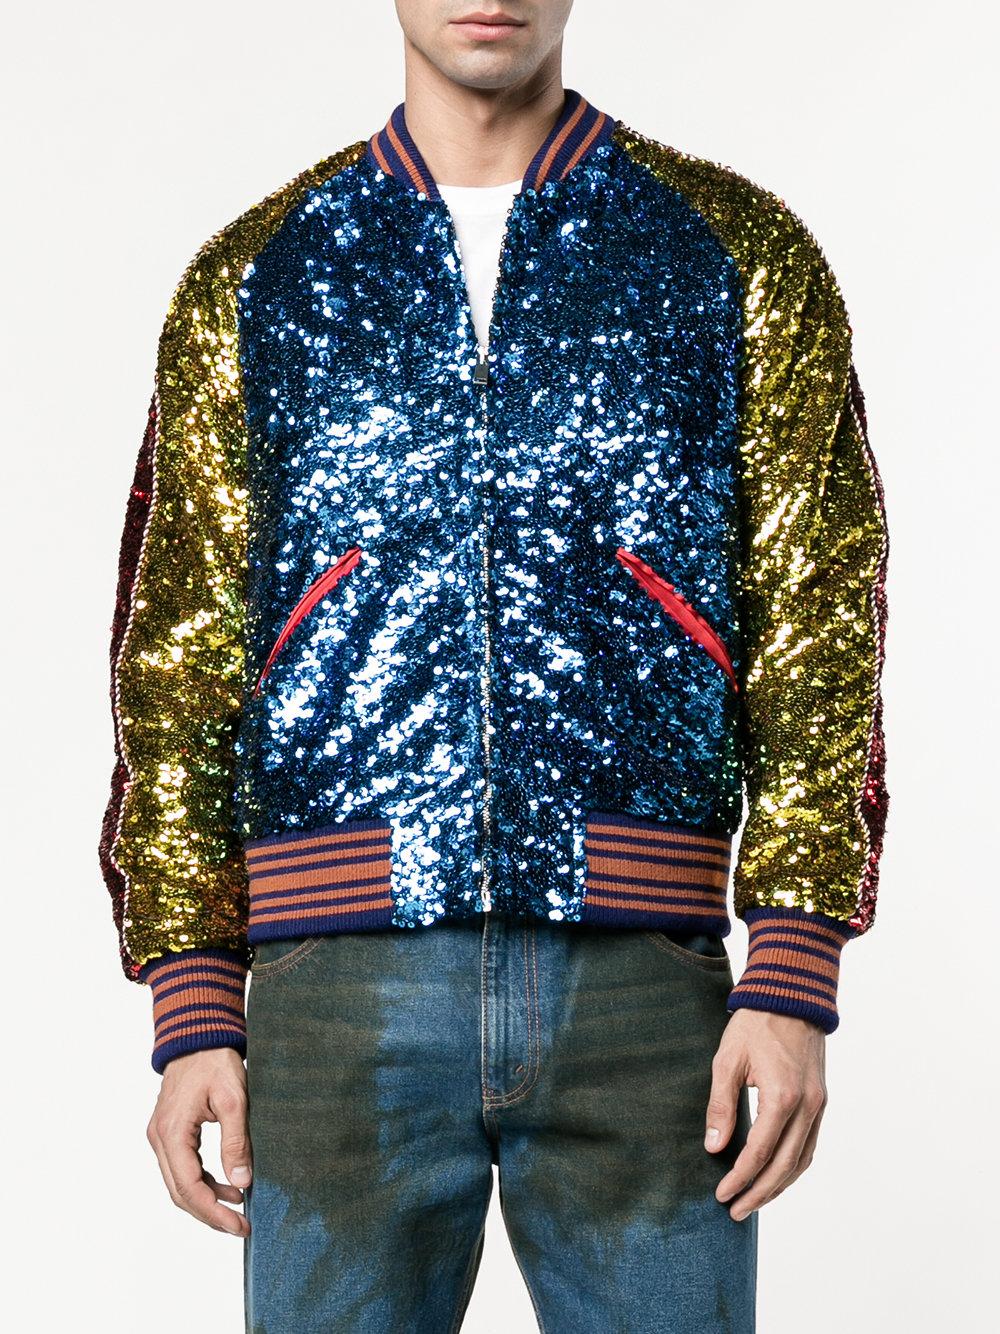 Gucci 'loved' Sequin Bomber Jacket in Blue for Men - Lyst